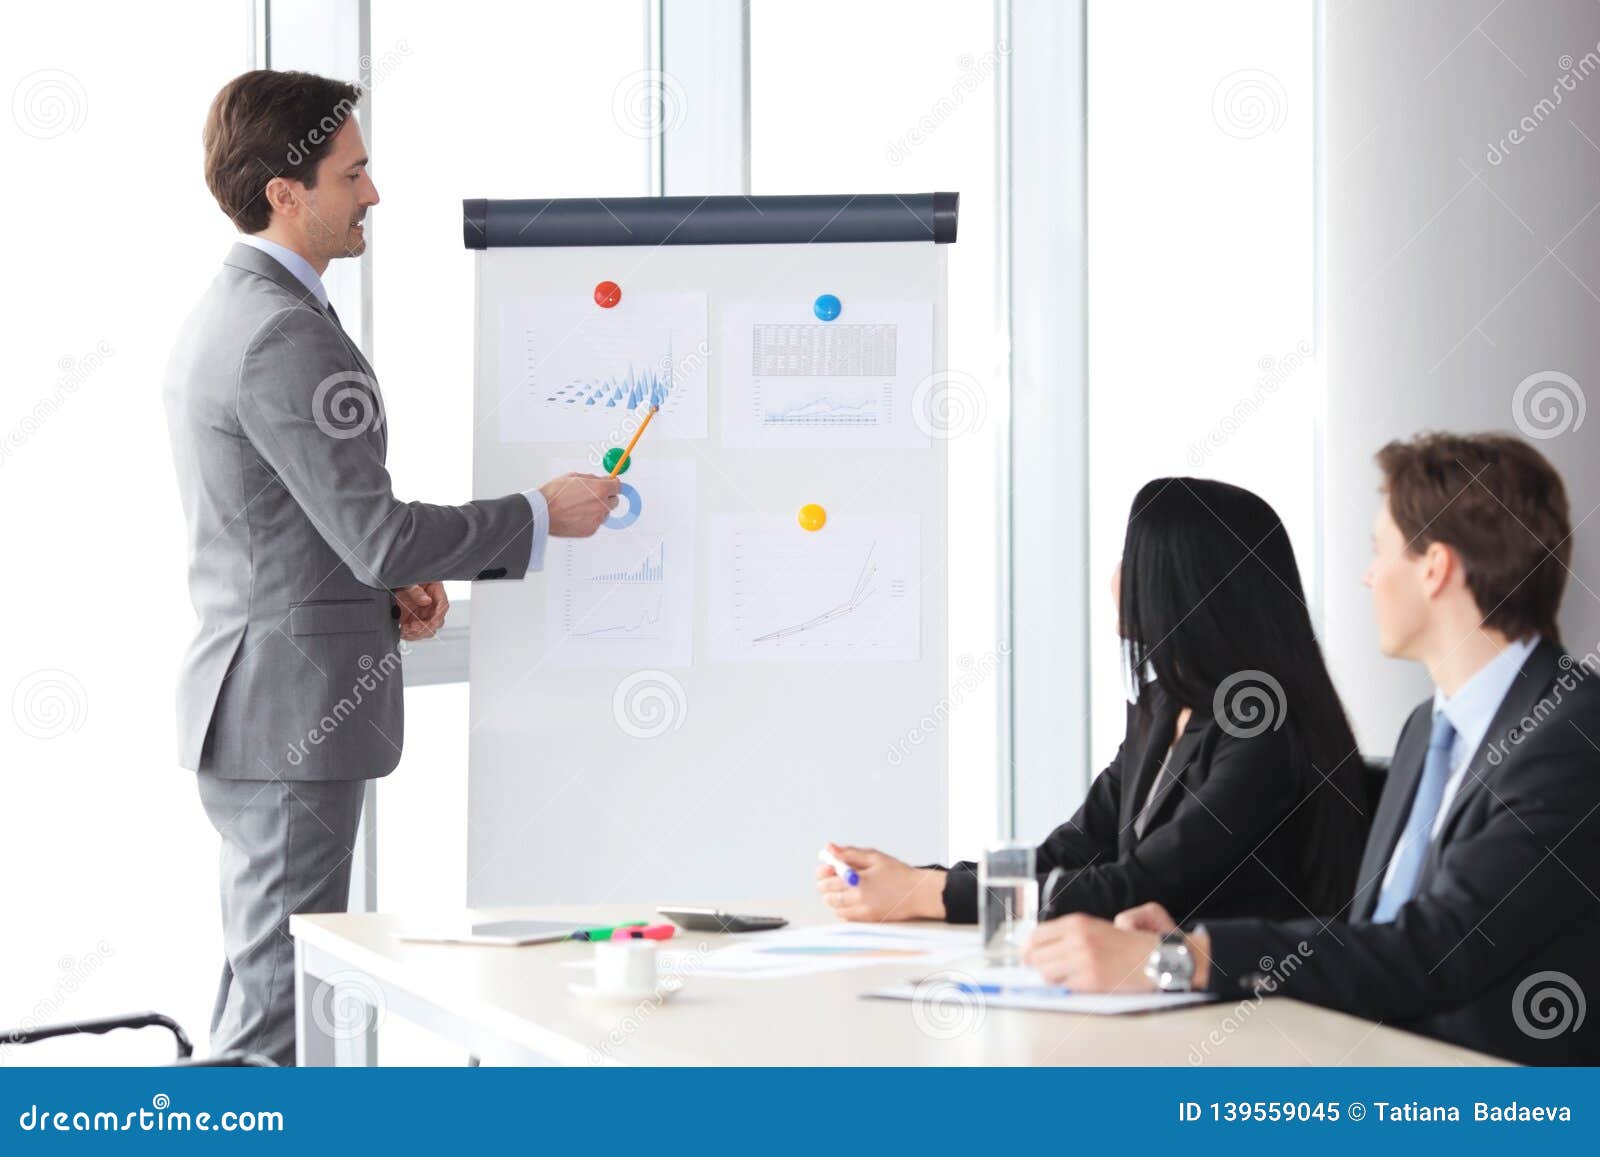 office presentation stock image